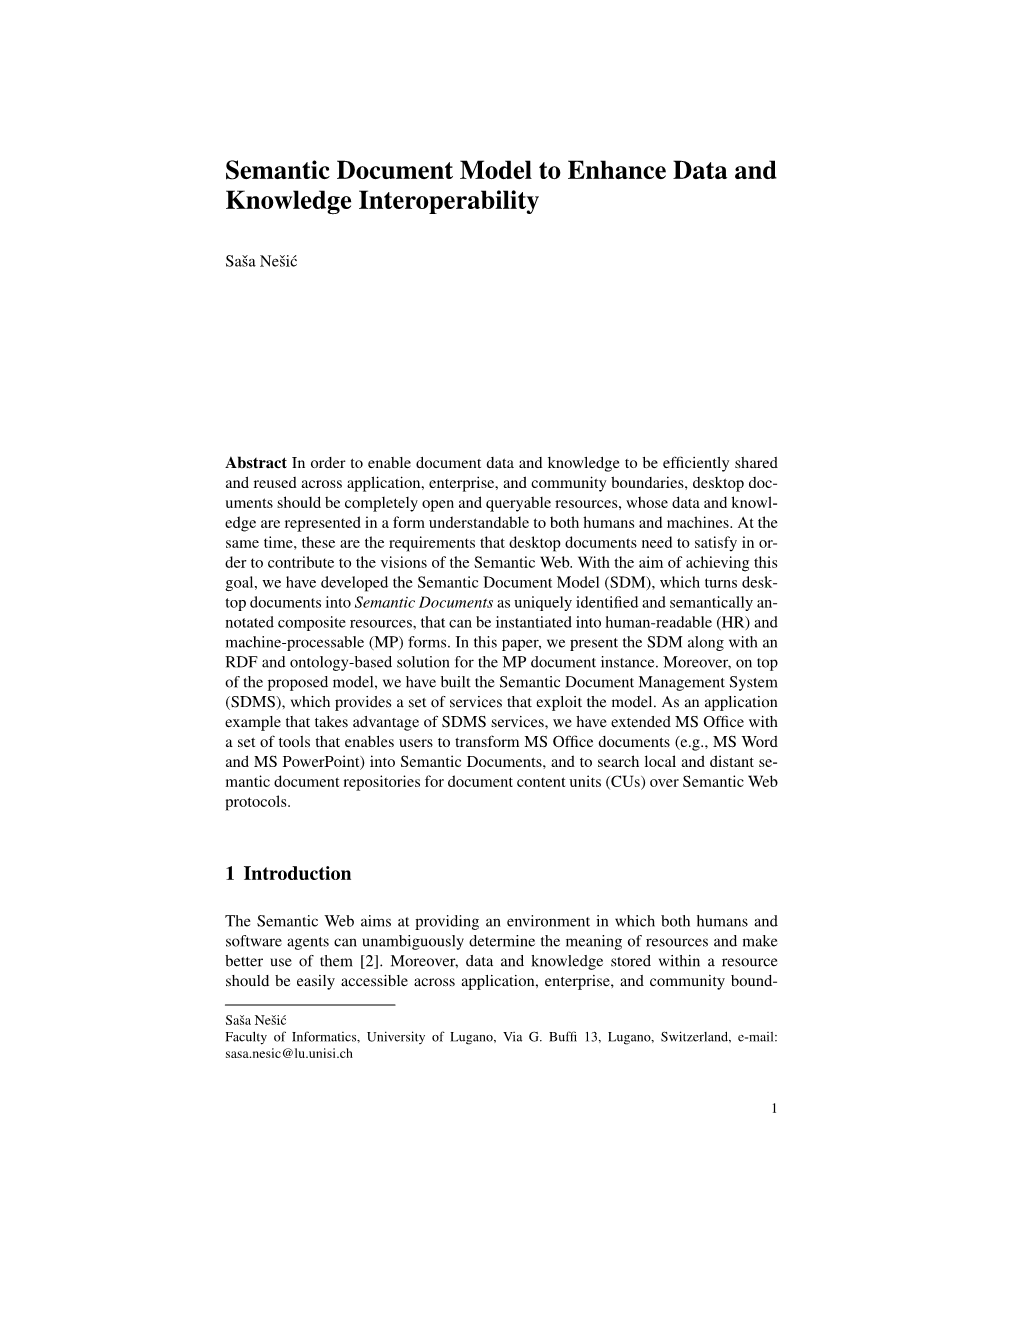 Semantic Document Model to Enhance Data and Knowledge Interoperability